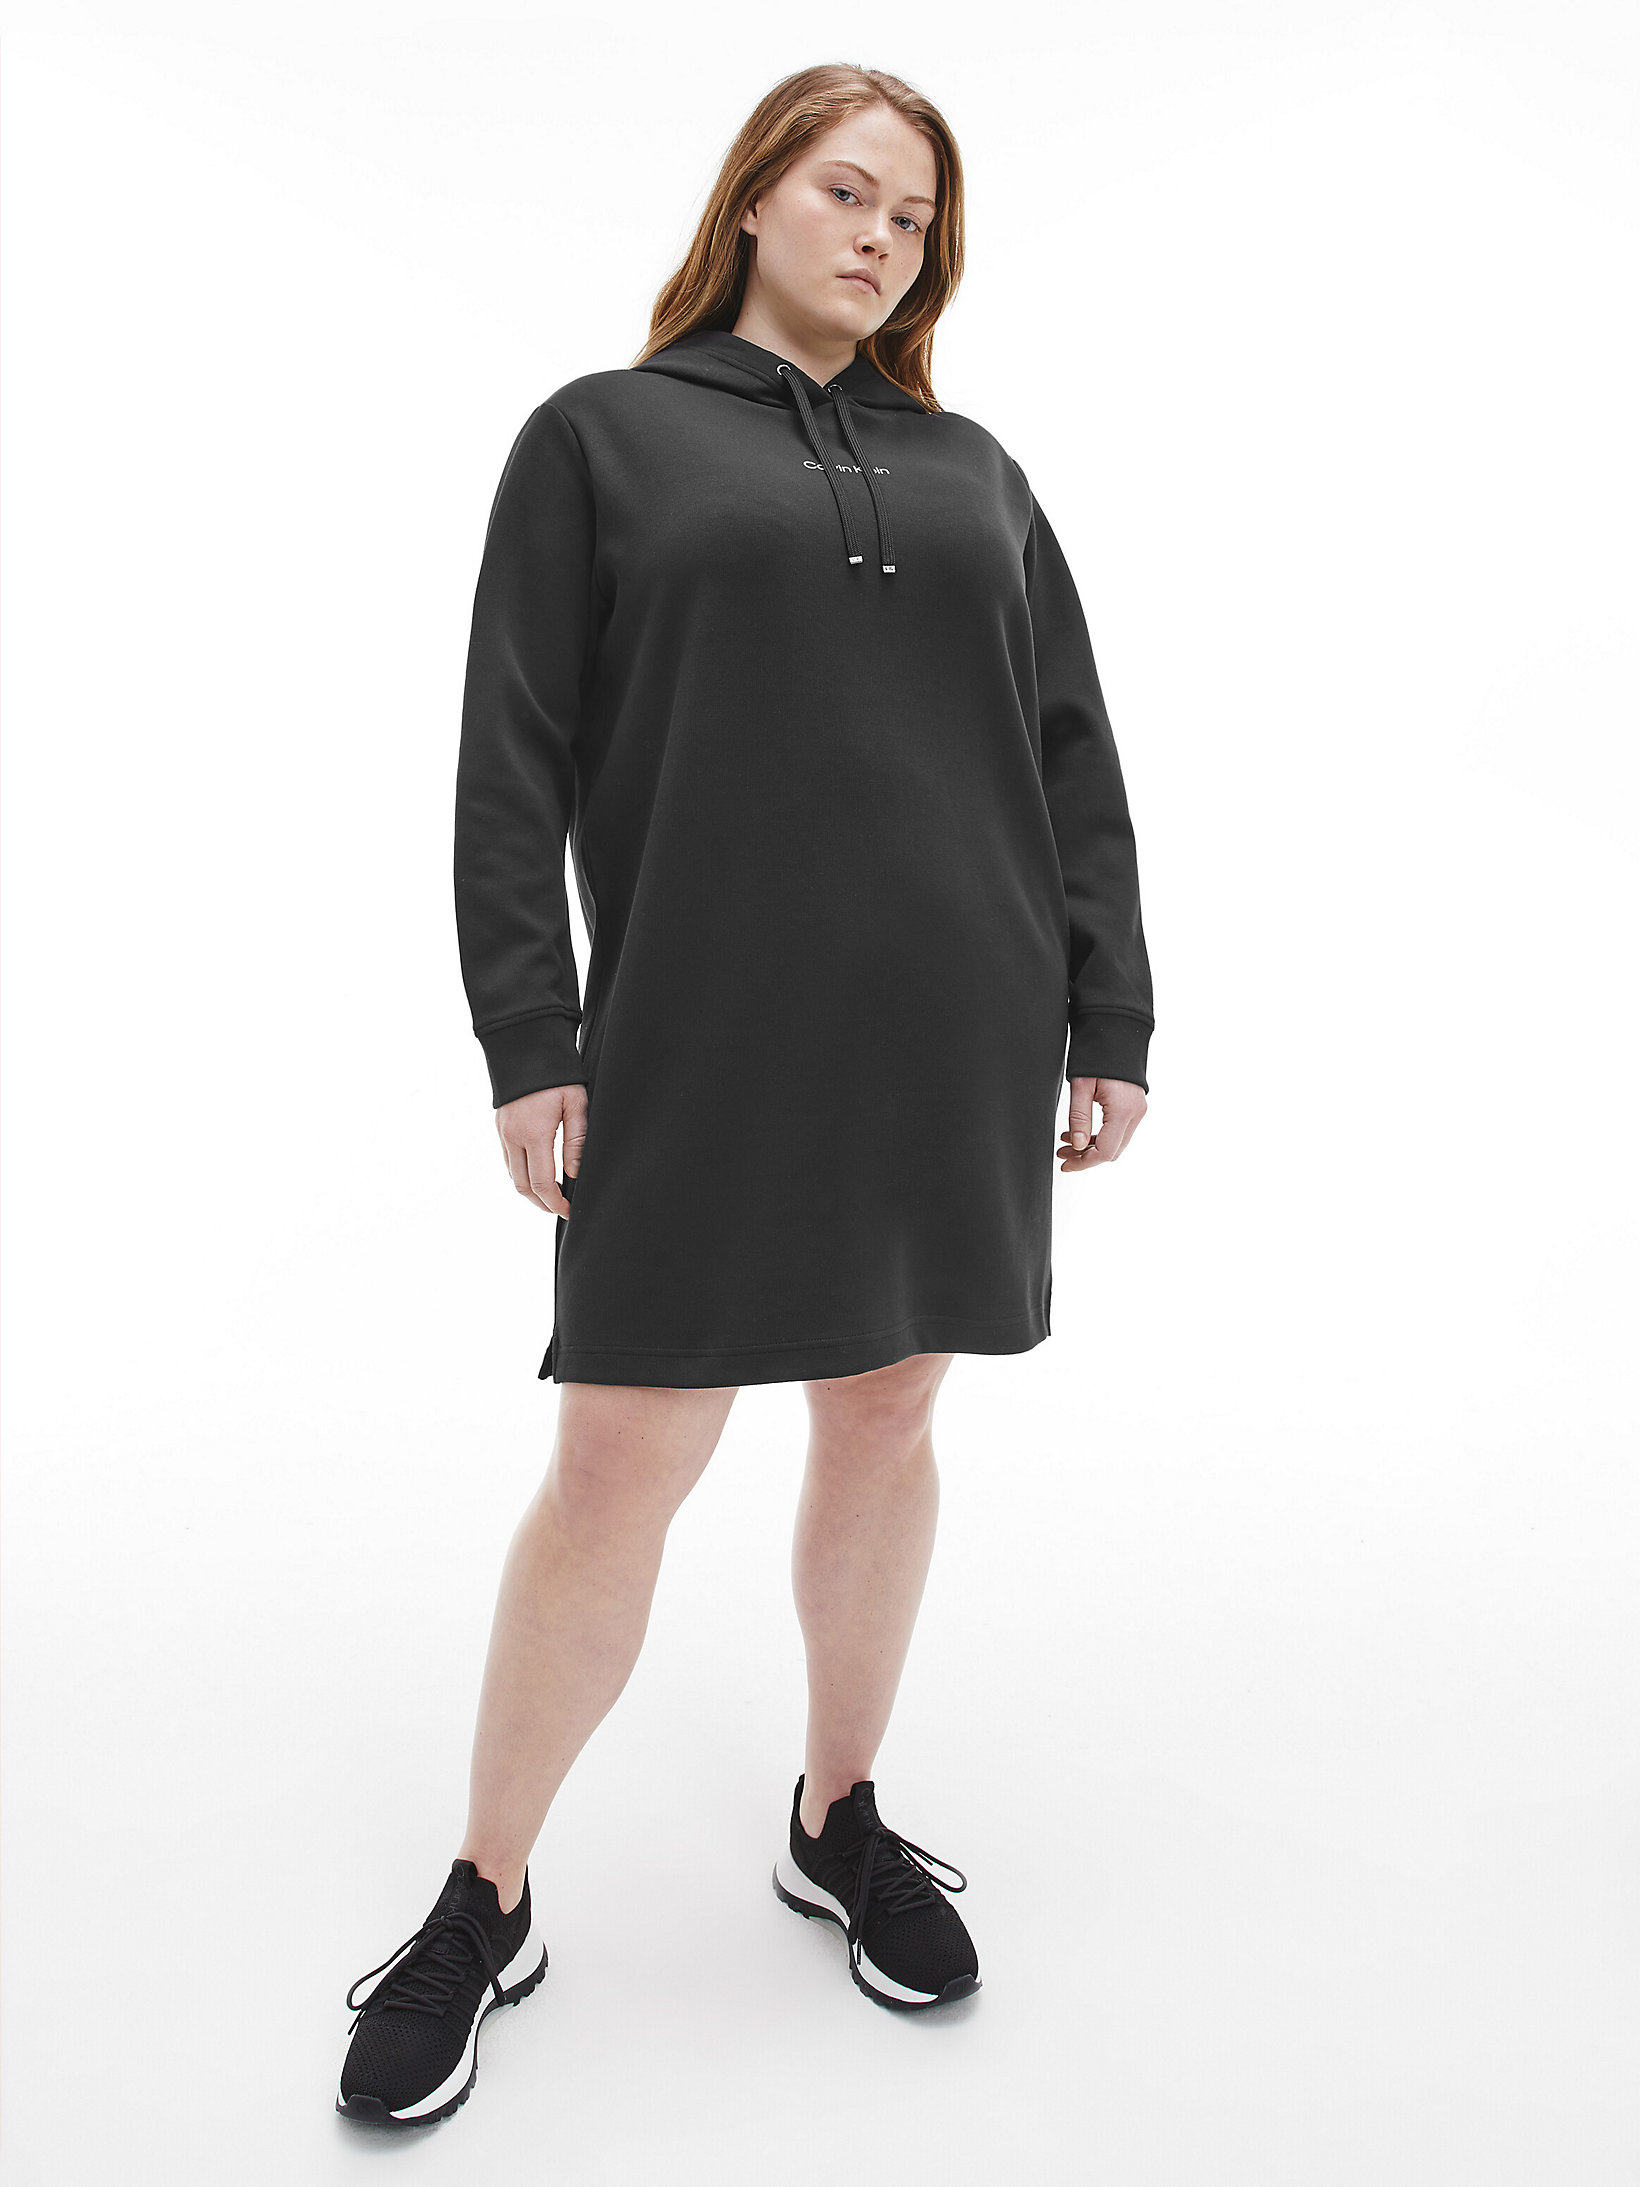 CK Black Plus Size Hooded Sweatshirt Dress undefined women Calvin Klein